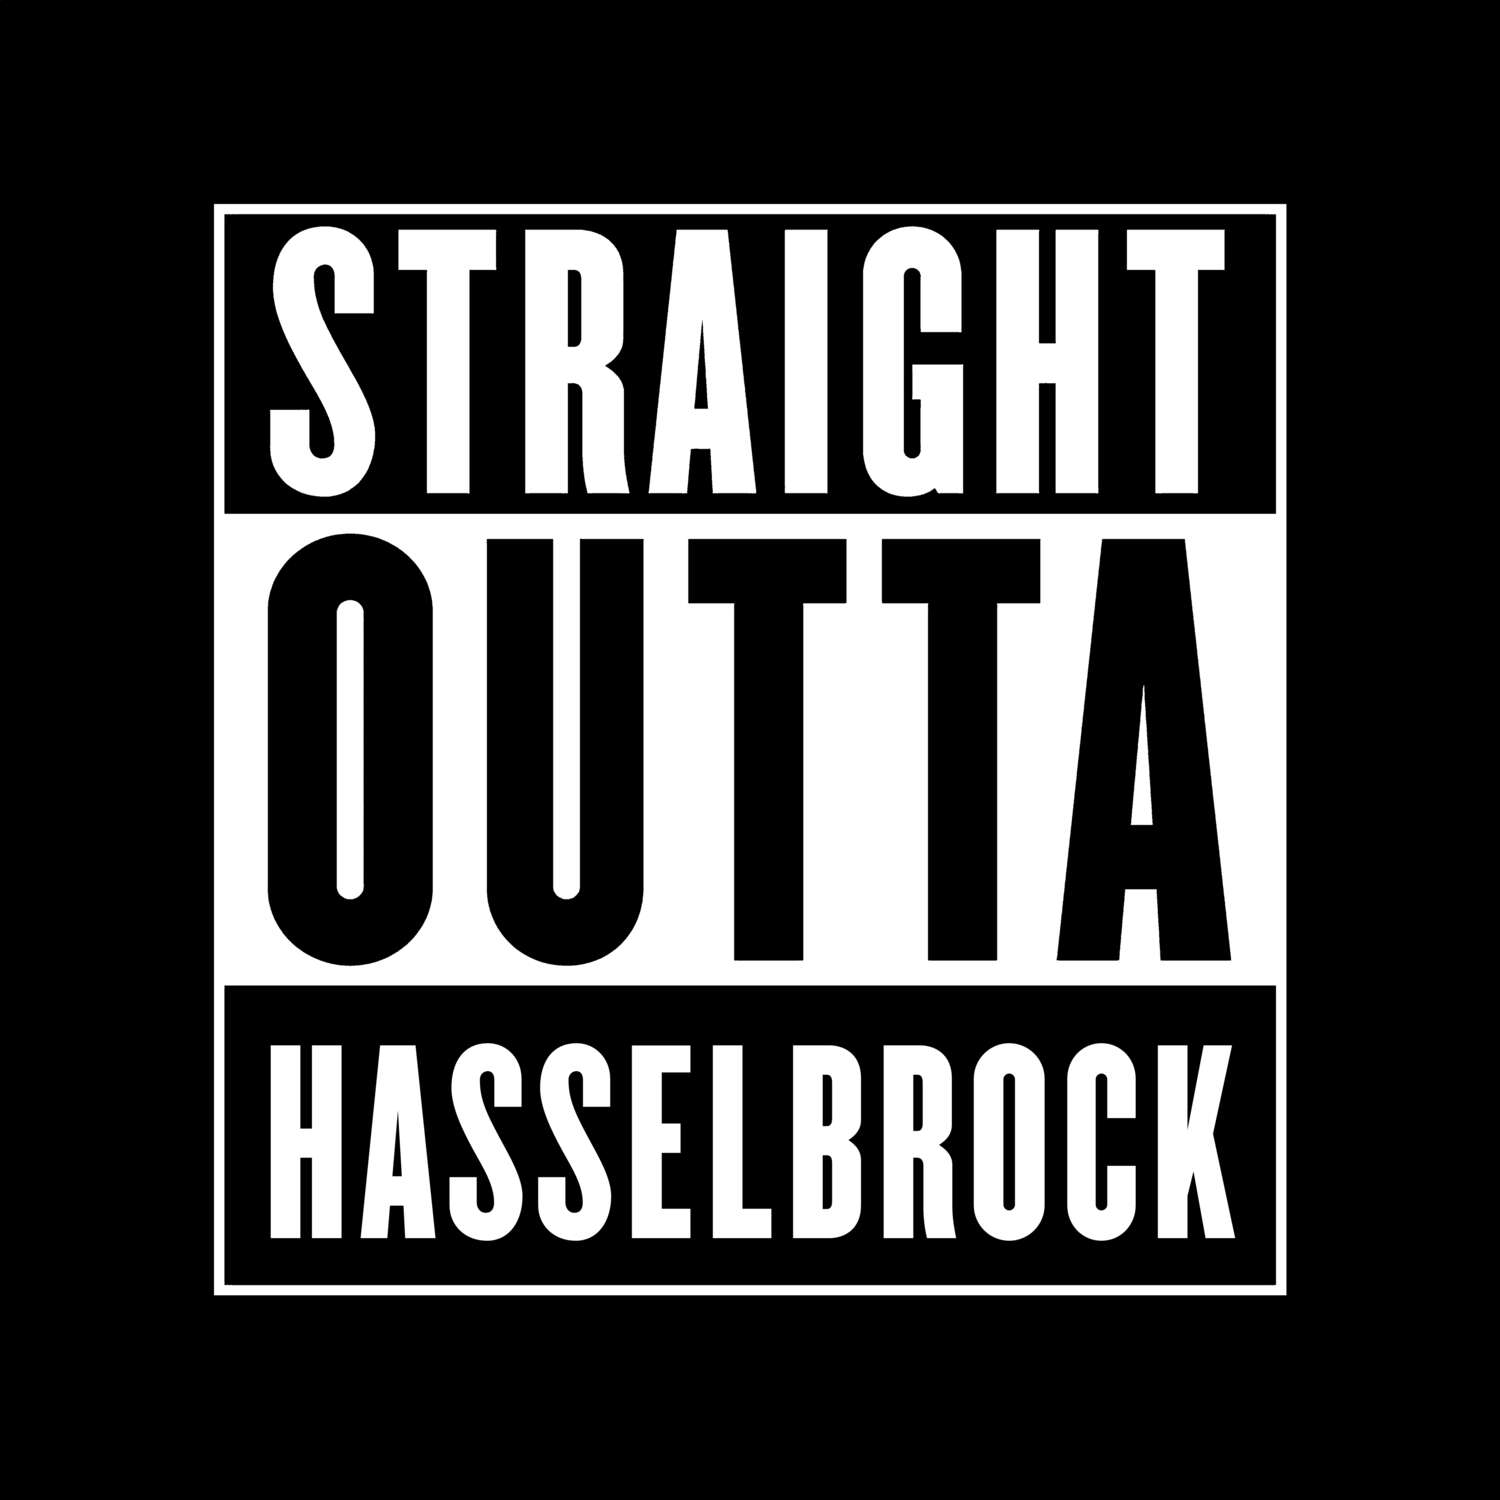 Hasselbrock T-Shirt »Straight Outta«